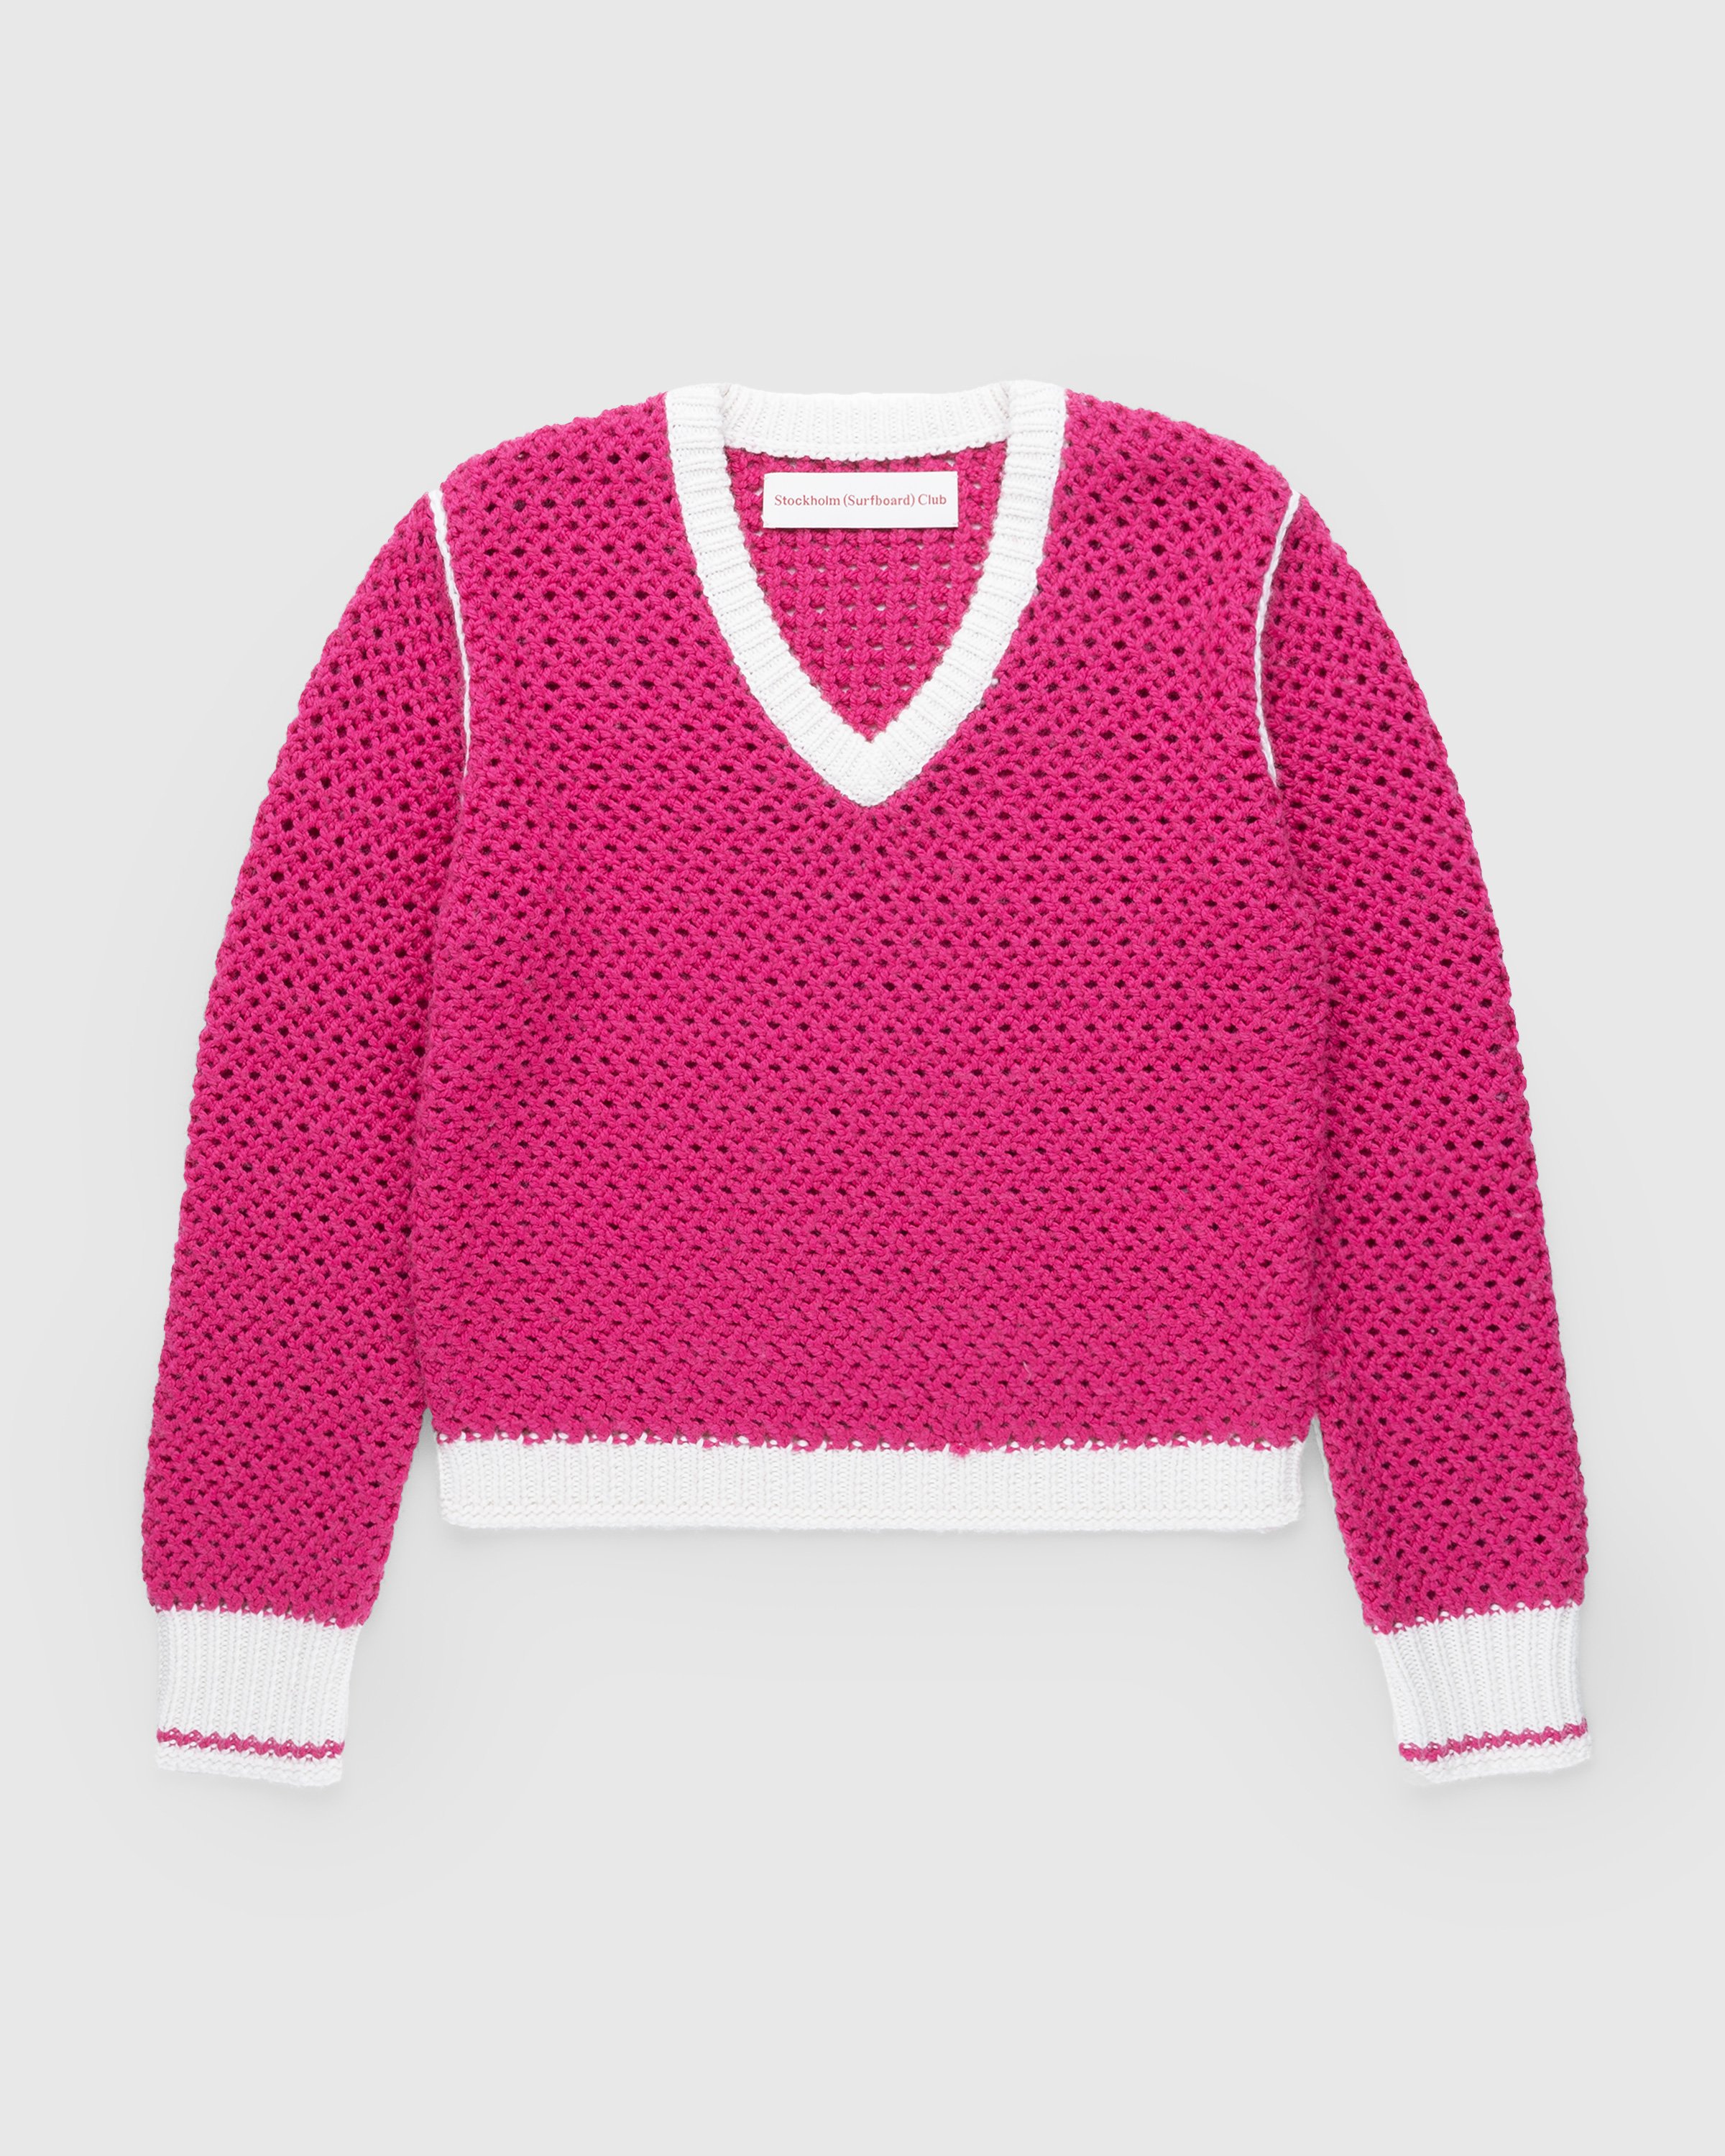 Stockholm Surfboard Club - Lola Flou Pink Pink - Clothing - Pink - Image 1